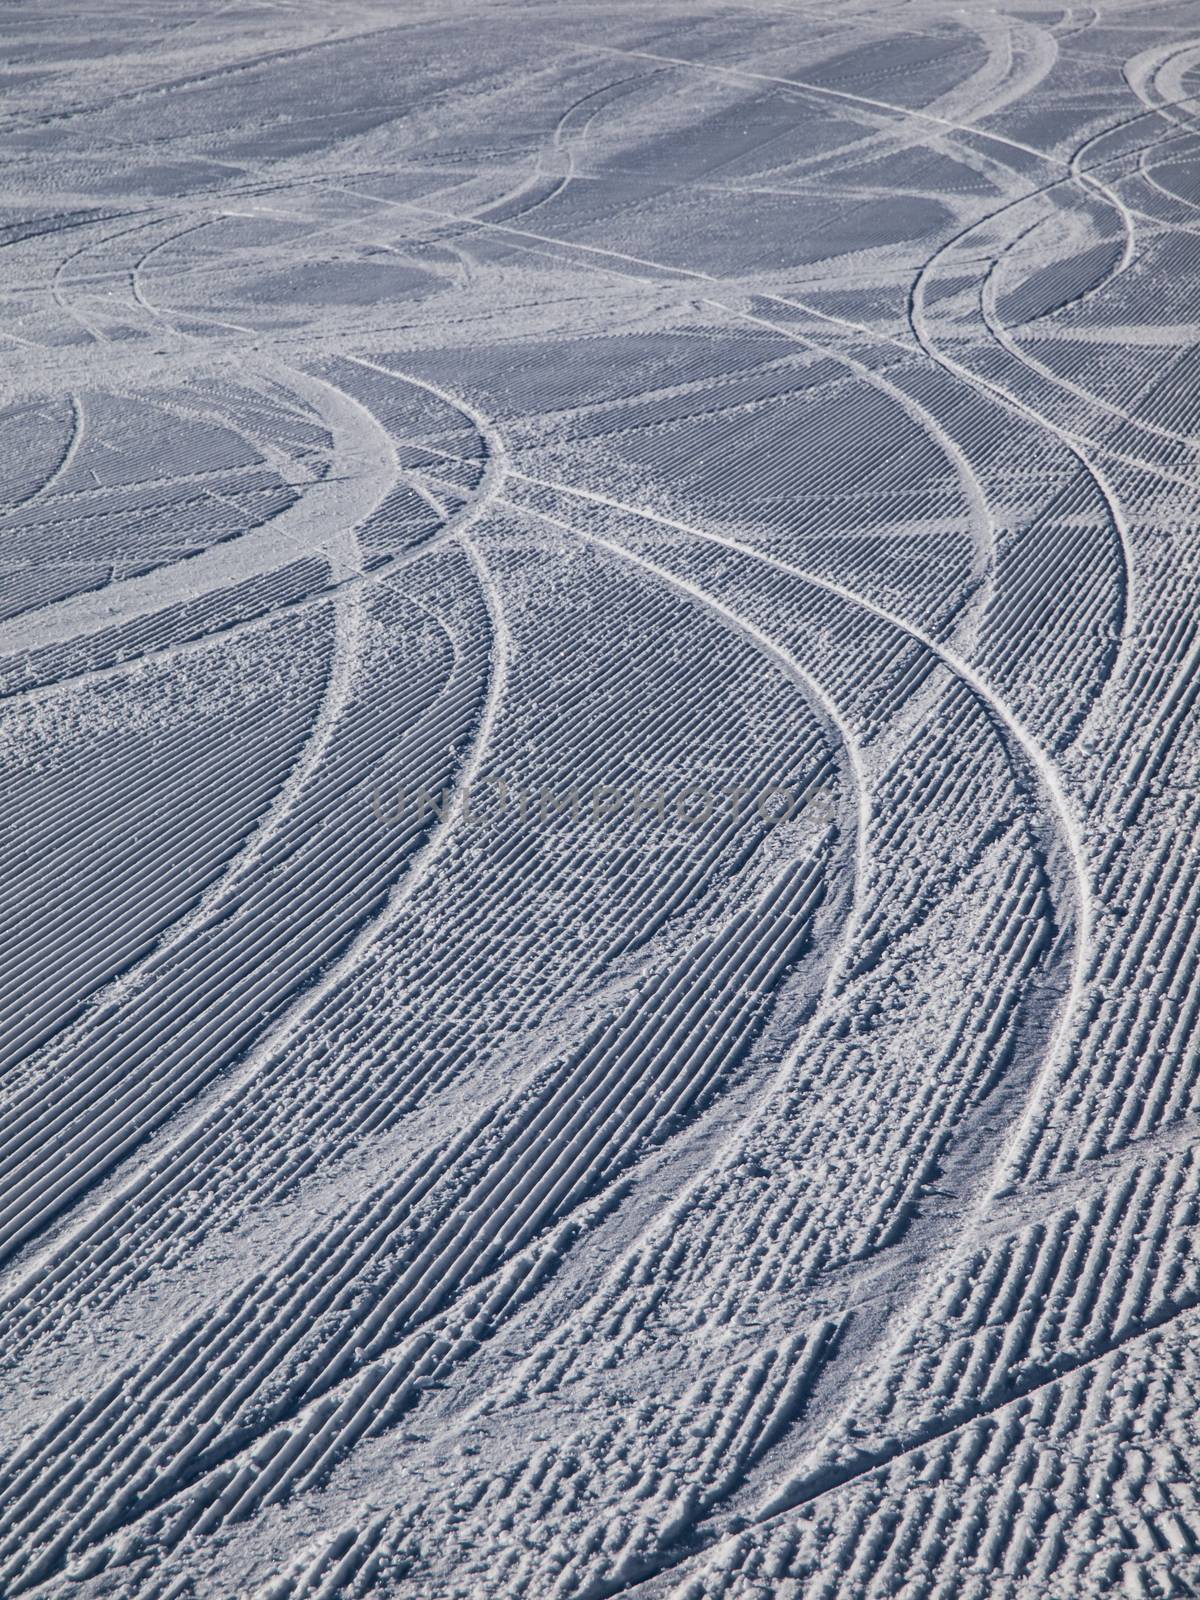 Skiing background - downhill ski tracks on ski slope